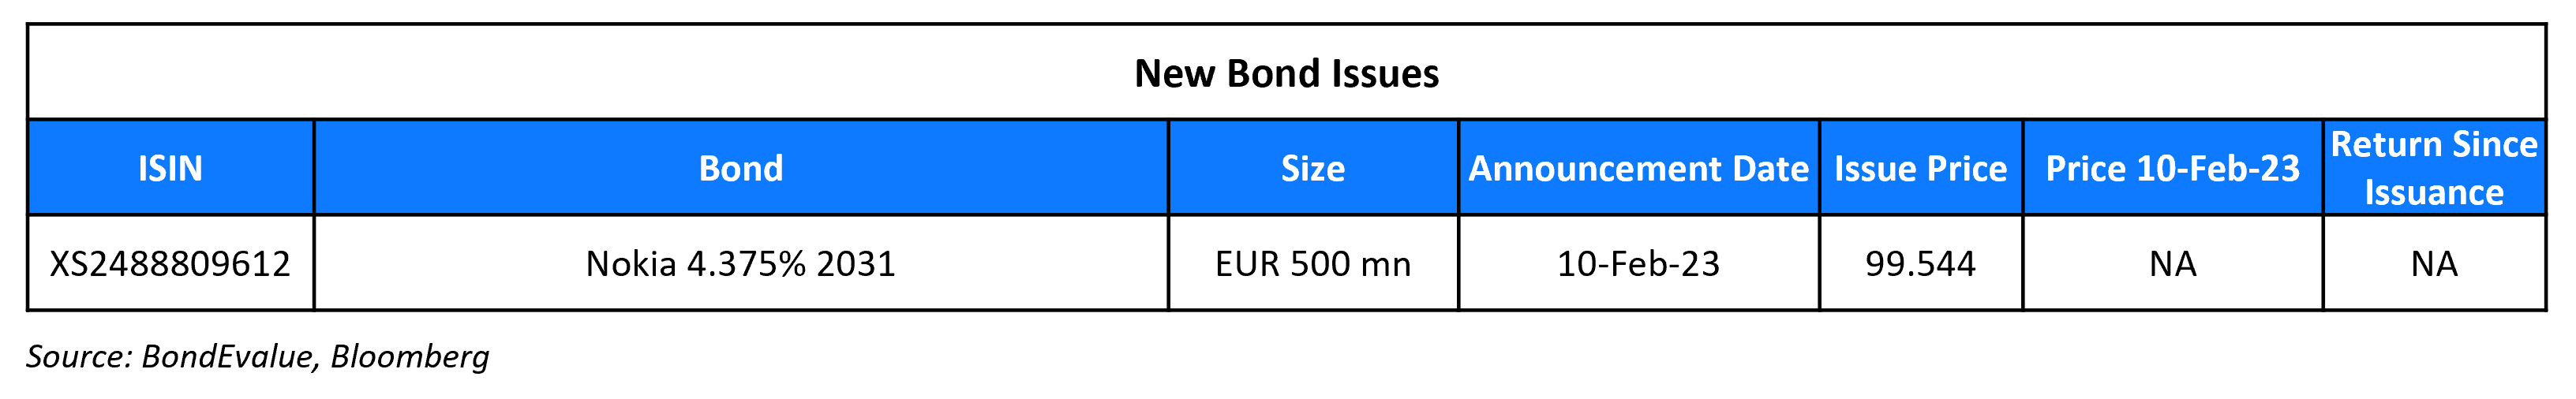 New Bond Issues 13 Feb 23